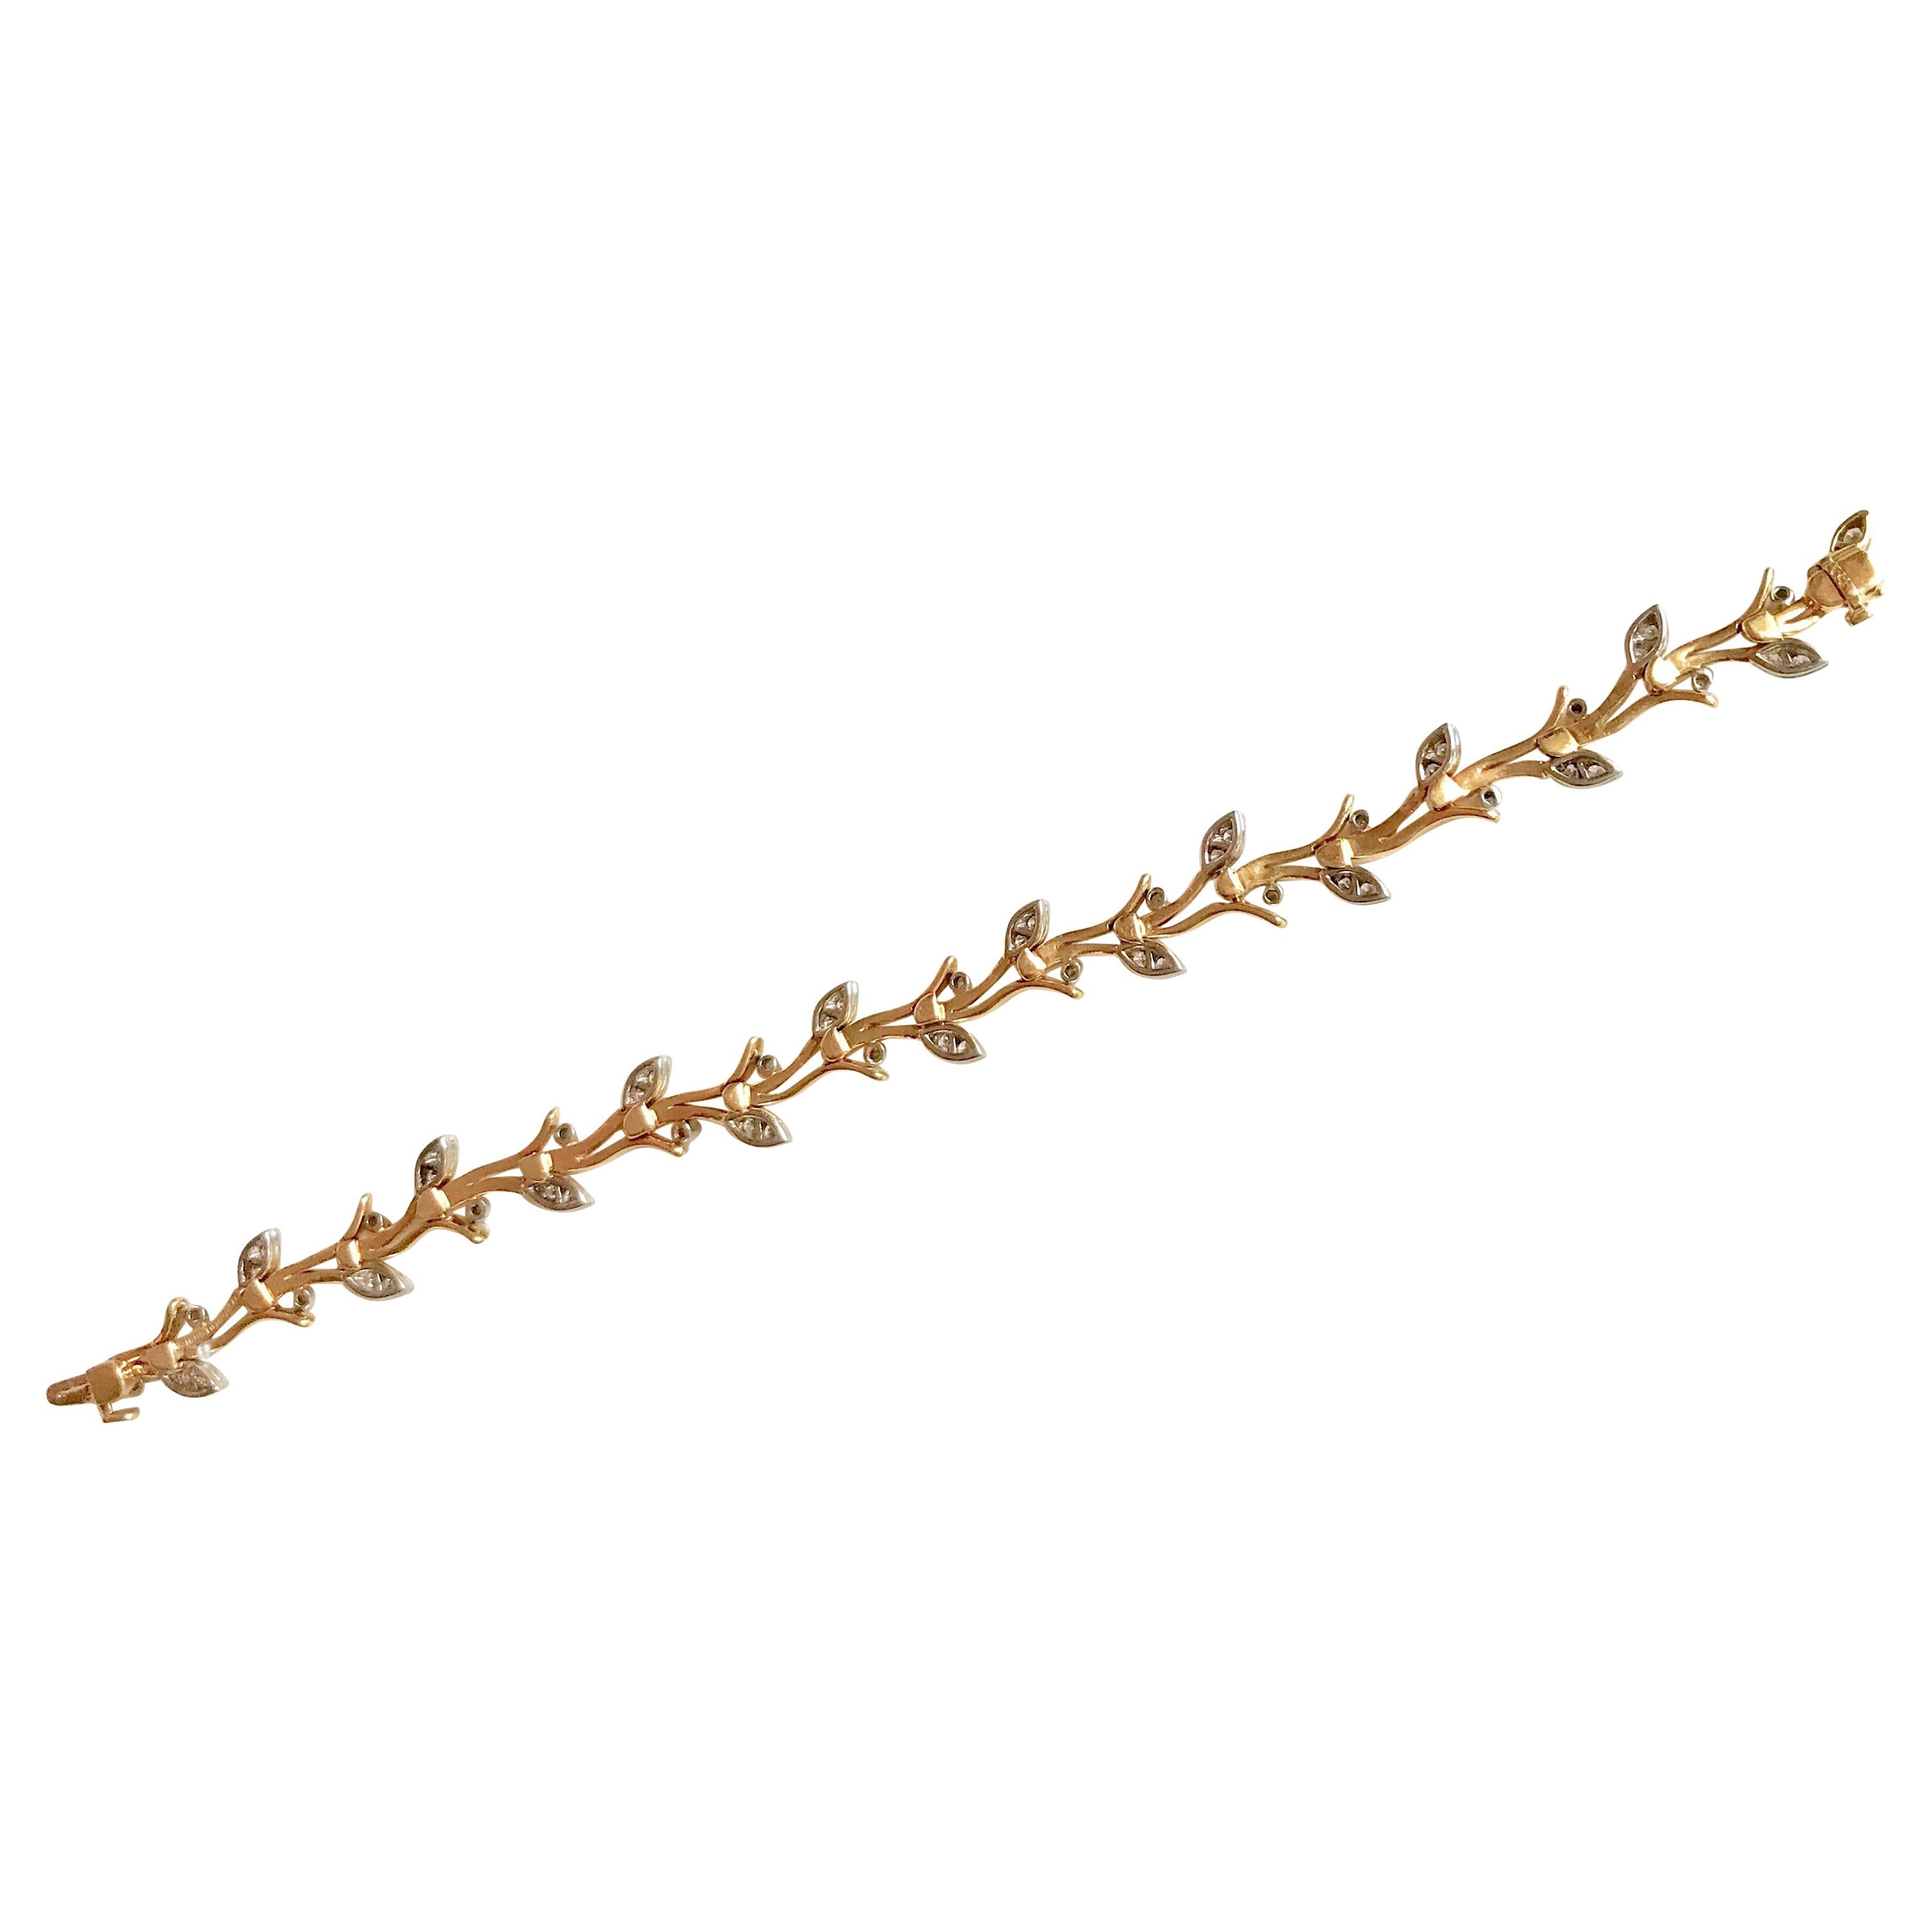 Tiffany & Co. Bracelet in 18 Carat Yellow Gold, Platinum and Diamonds Twig Shape